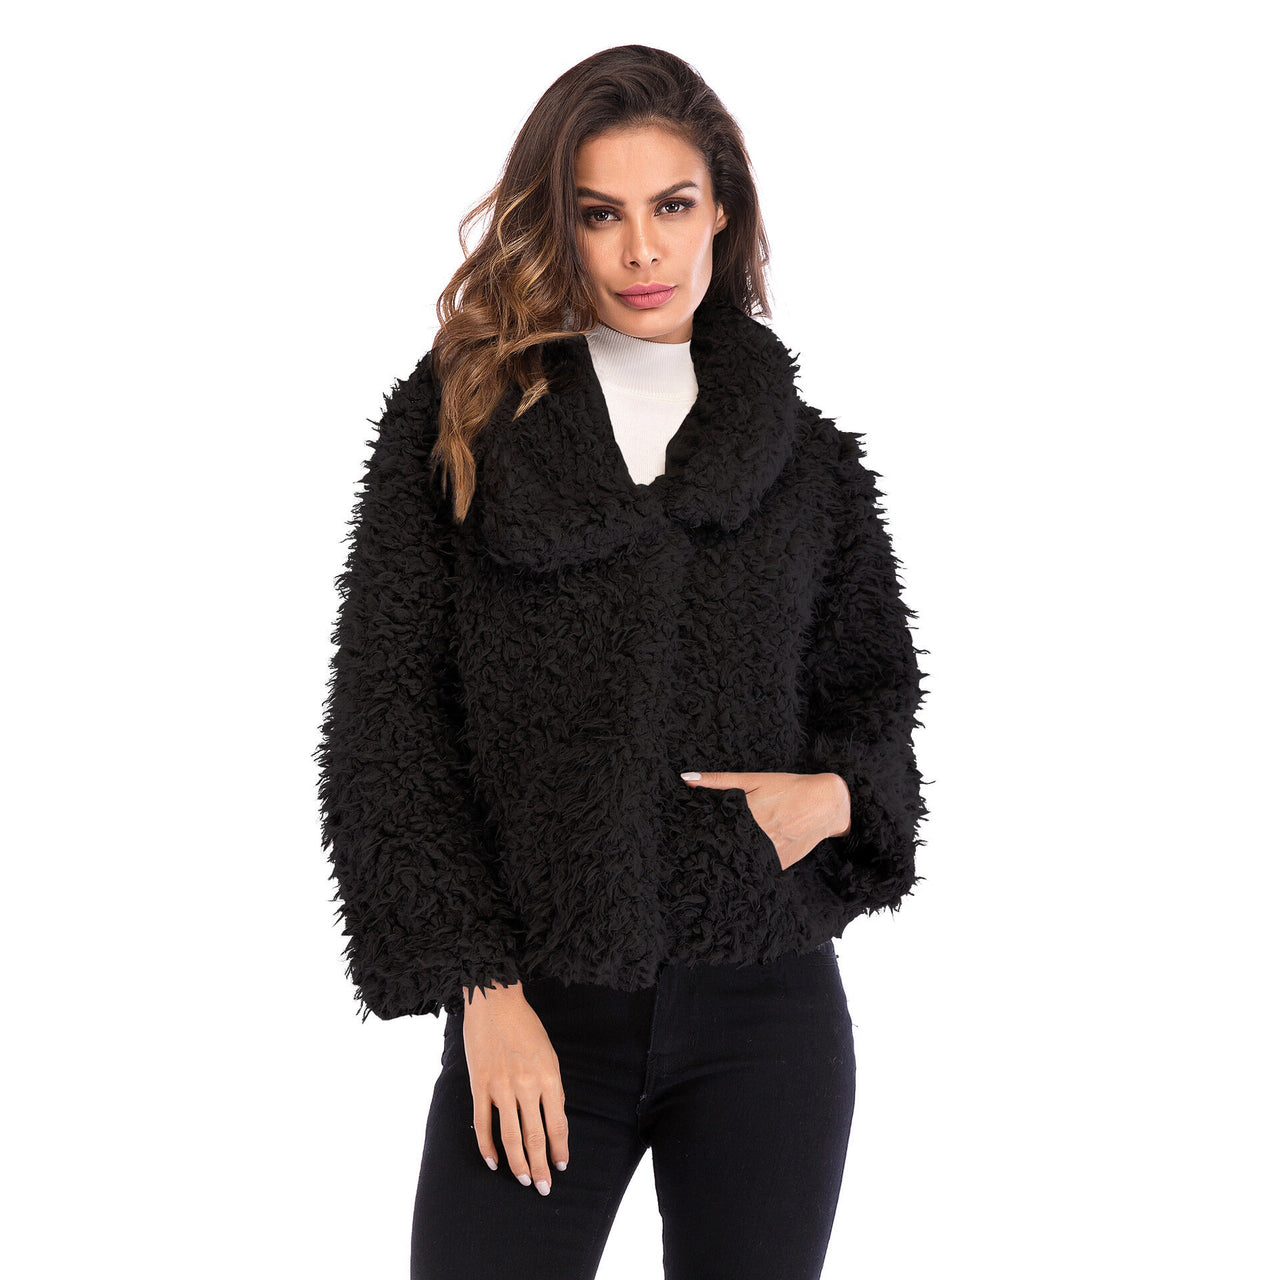 Women's Coat Fashion Lapel Faux Shearling Shaggy Oversized Coat Jacket Warm Winter